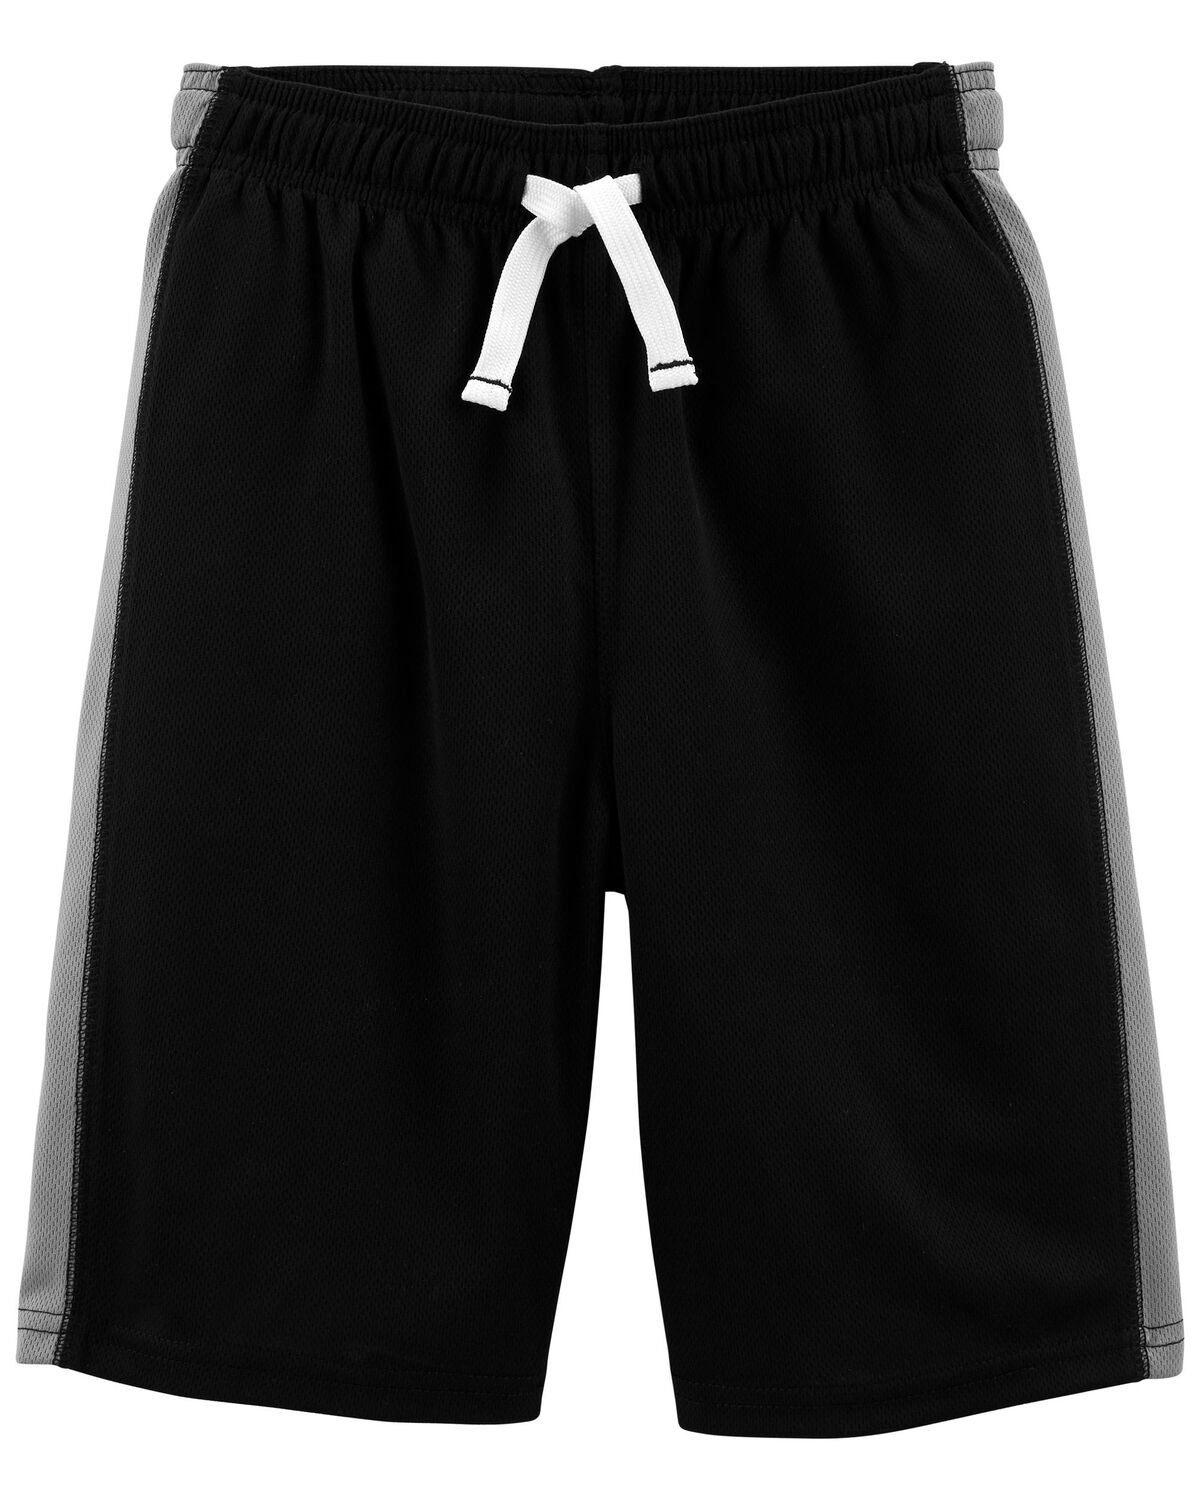 Black Kid Athletic Mesh Shorts | carters.com